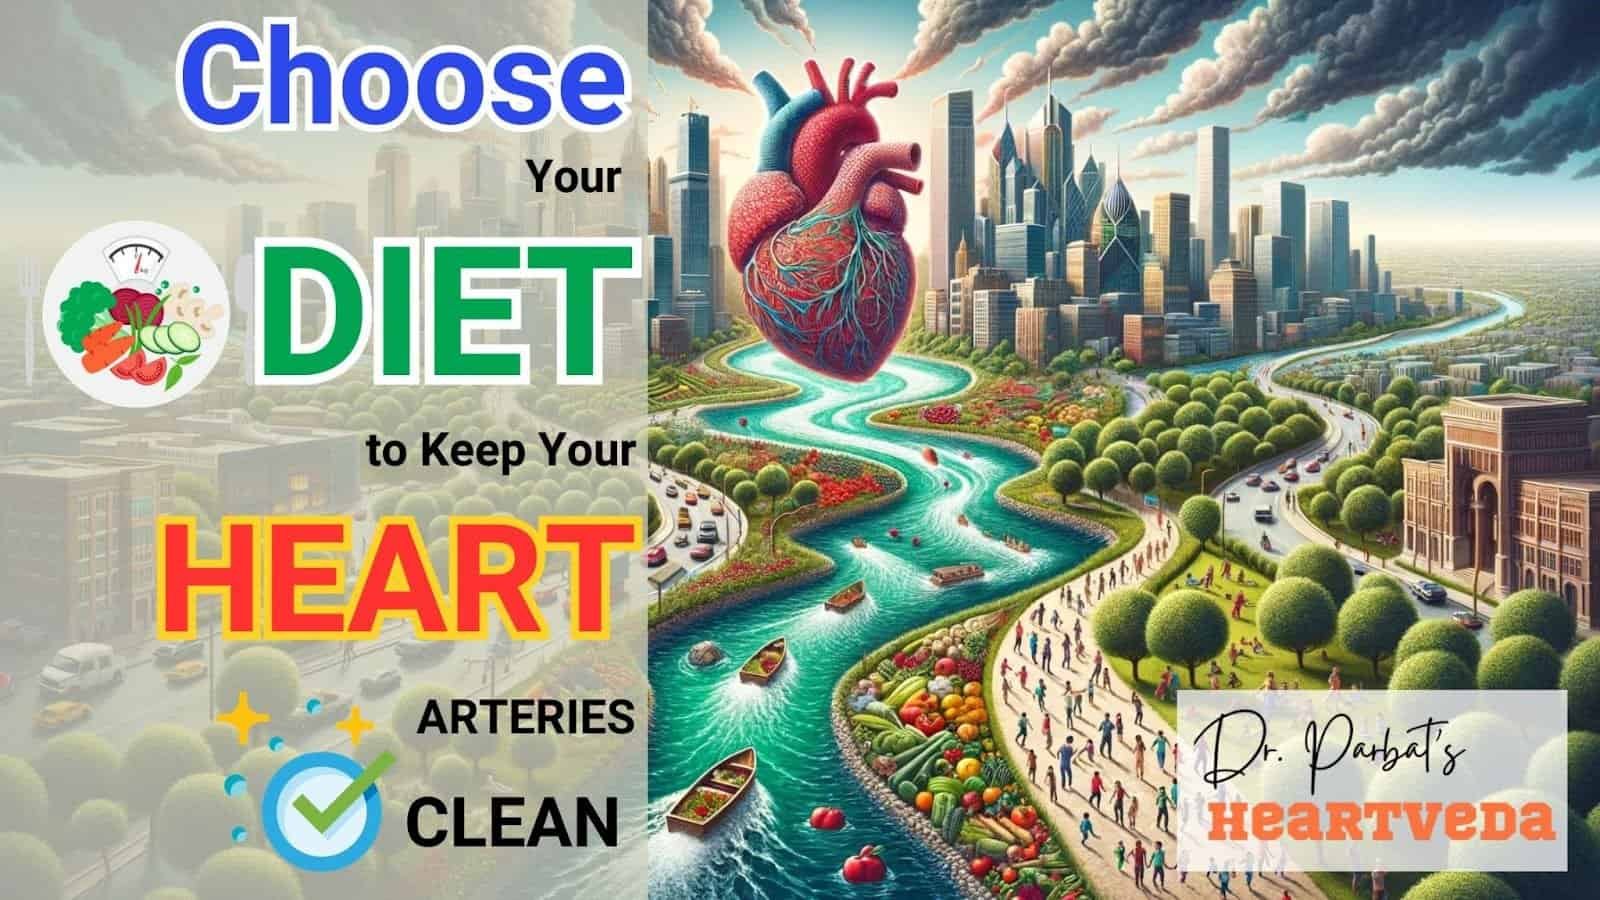 Blog Banner: Choose Your Diet to Keep Your Heart Arteries Clean - Dr. Biprajit Parbat - HEARTVEDA